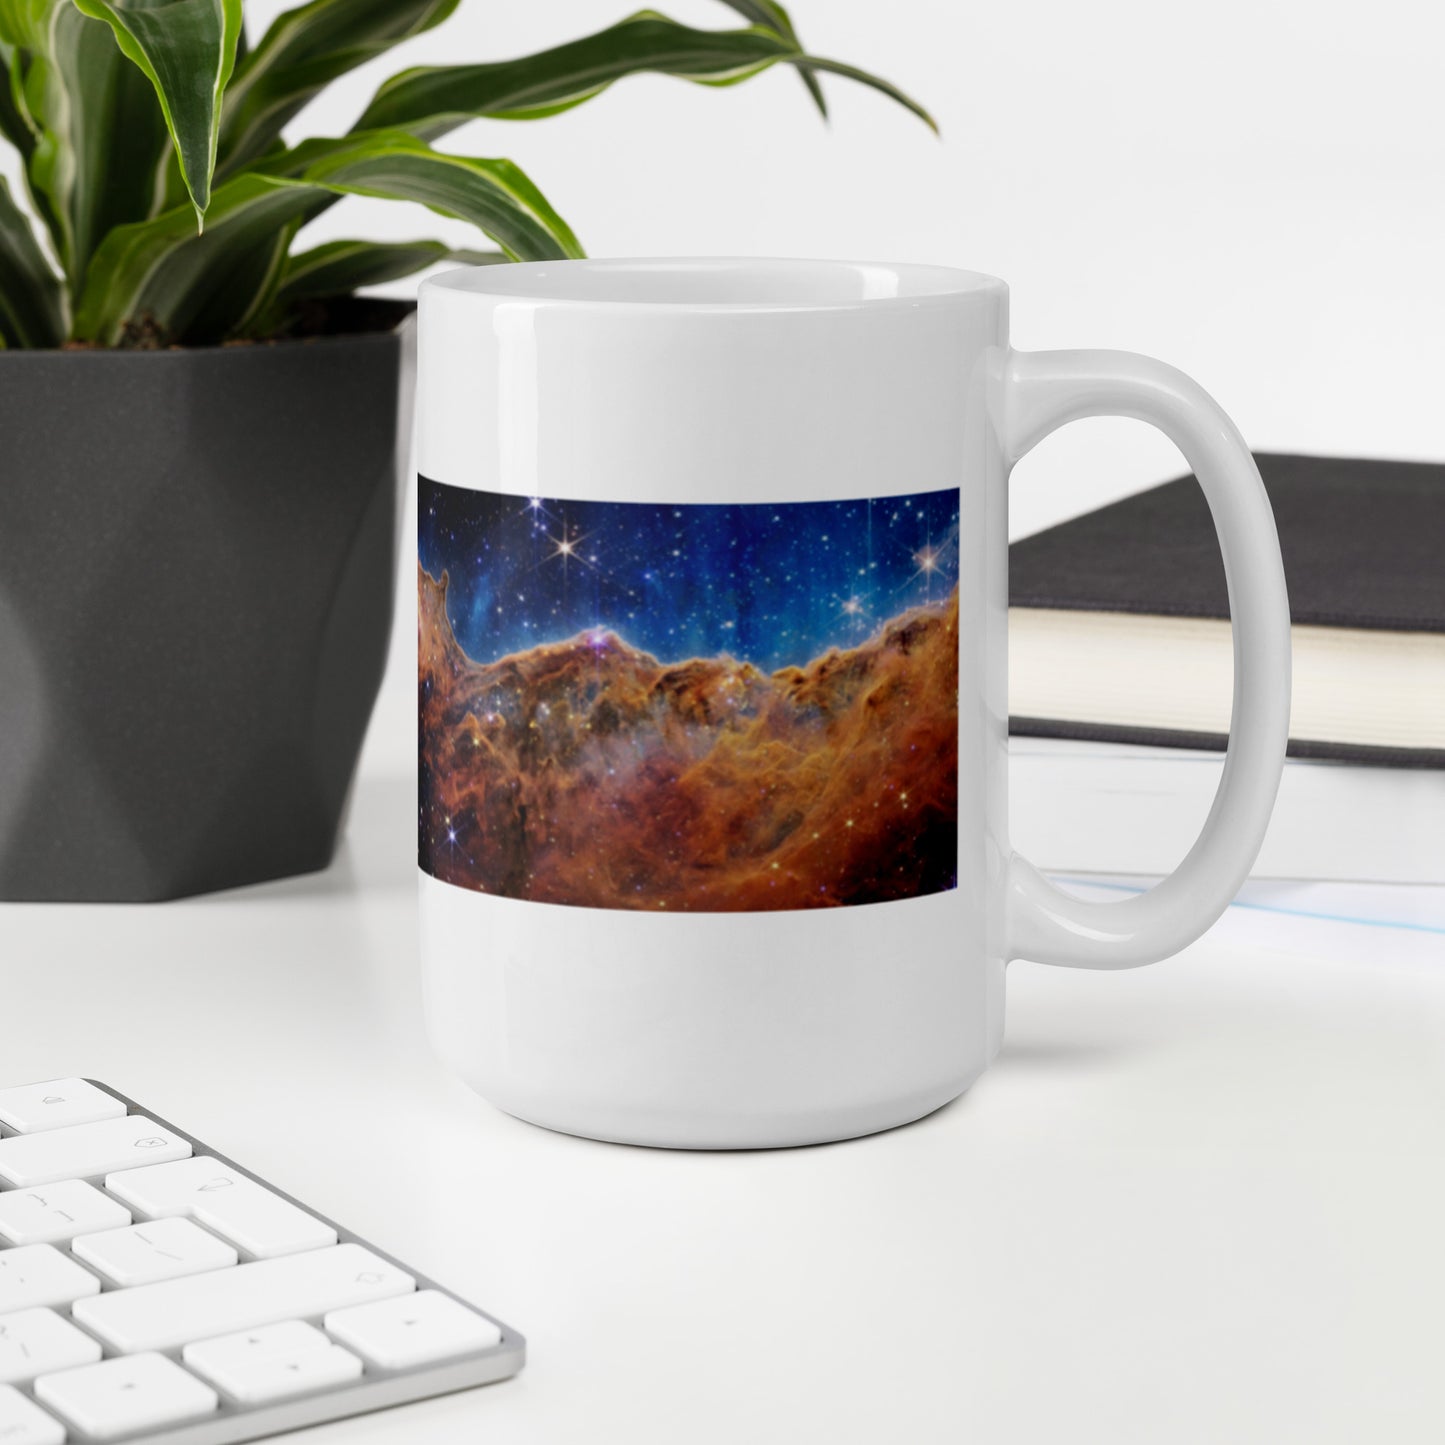 Webb Telescope 1 White glossy mug